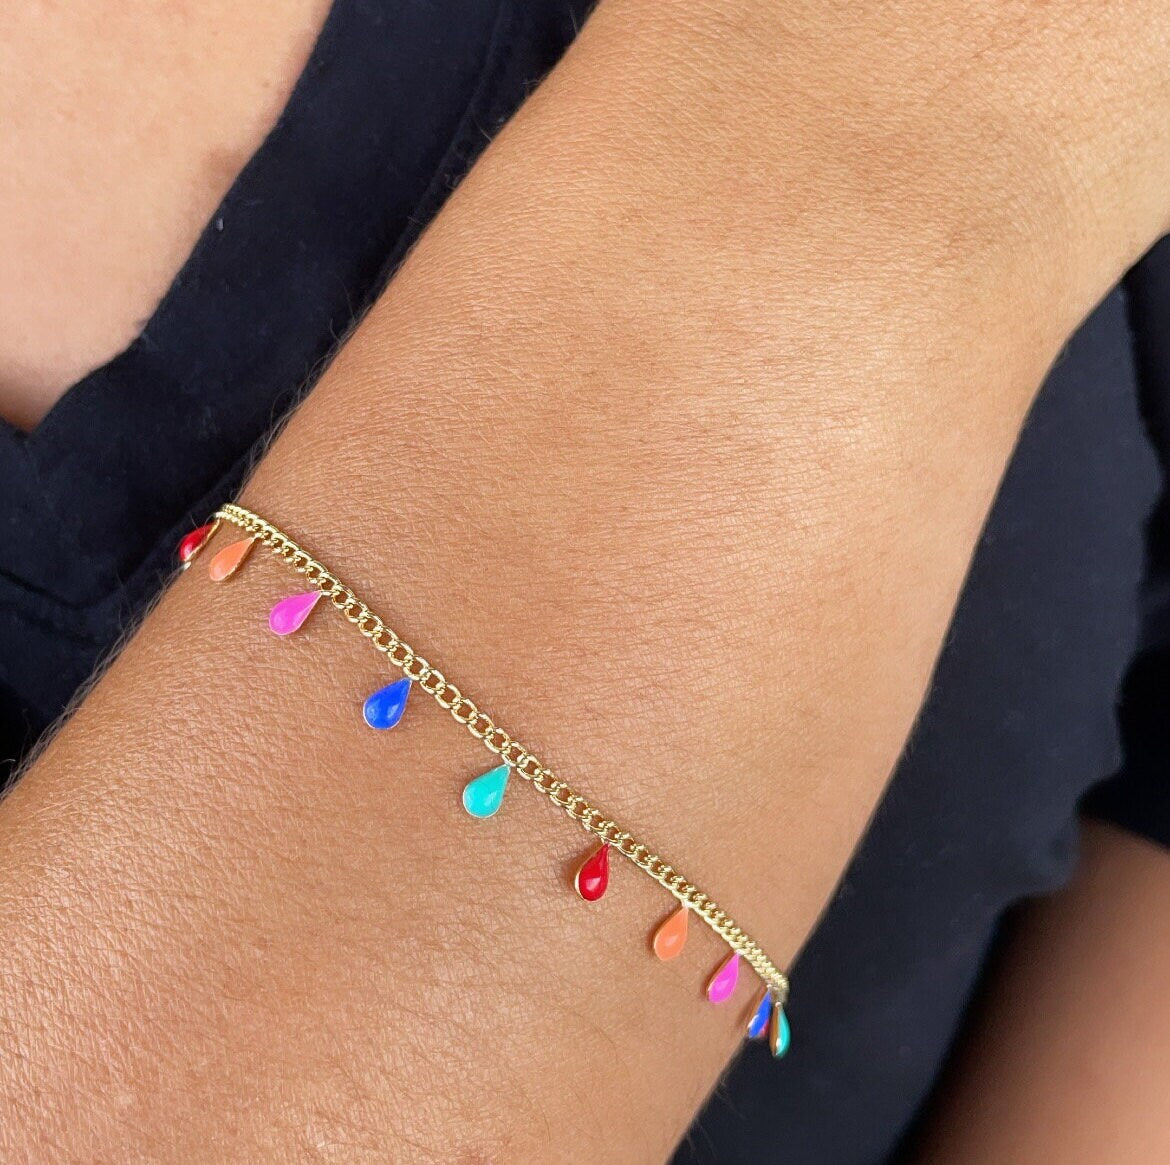 18k Gold Filled Little Colorful Enamel Tear Drop Charms Set Necklace and Bracelet Supplies